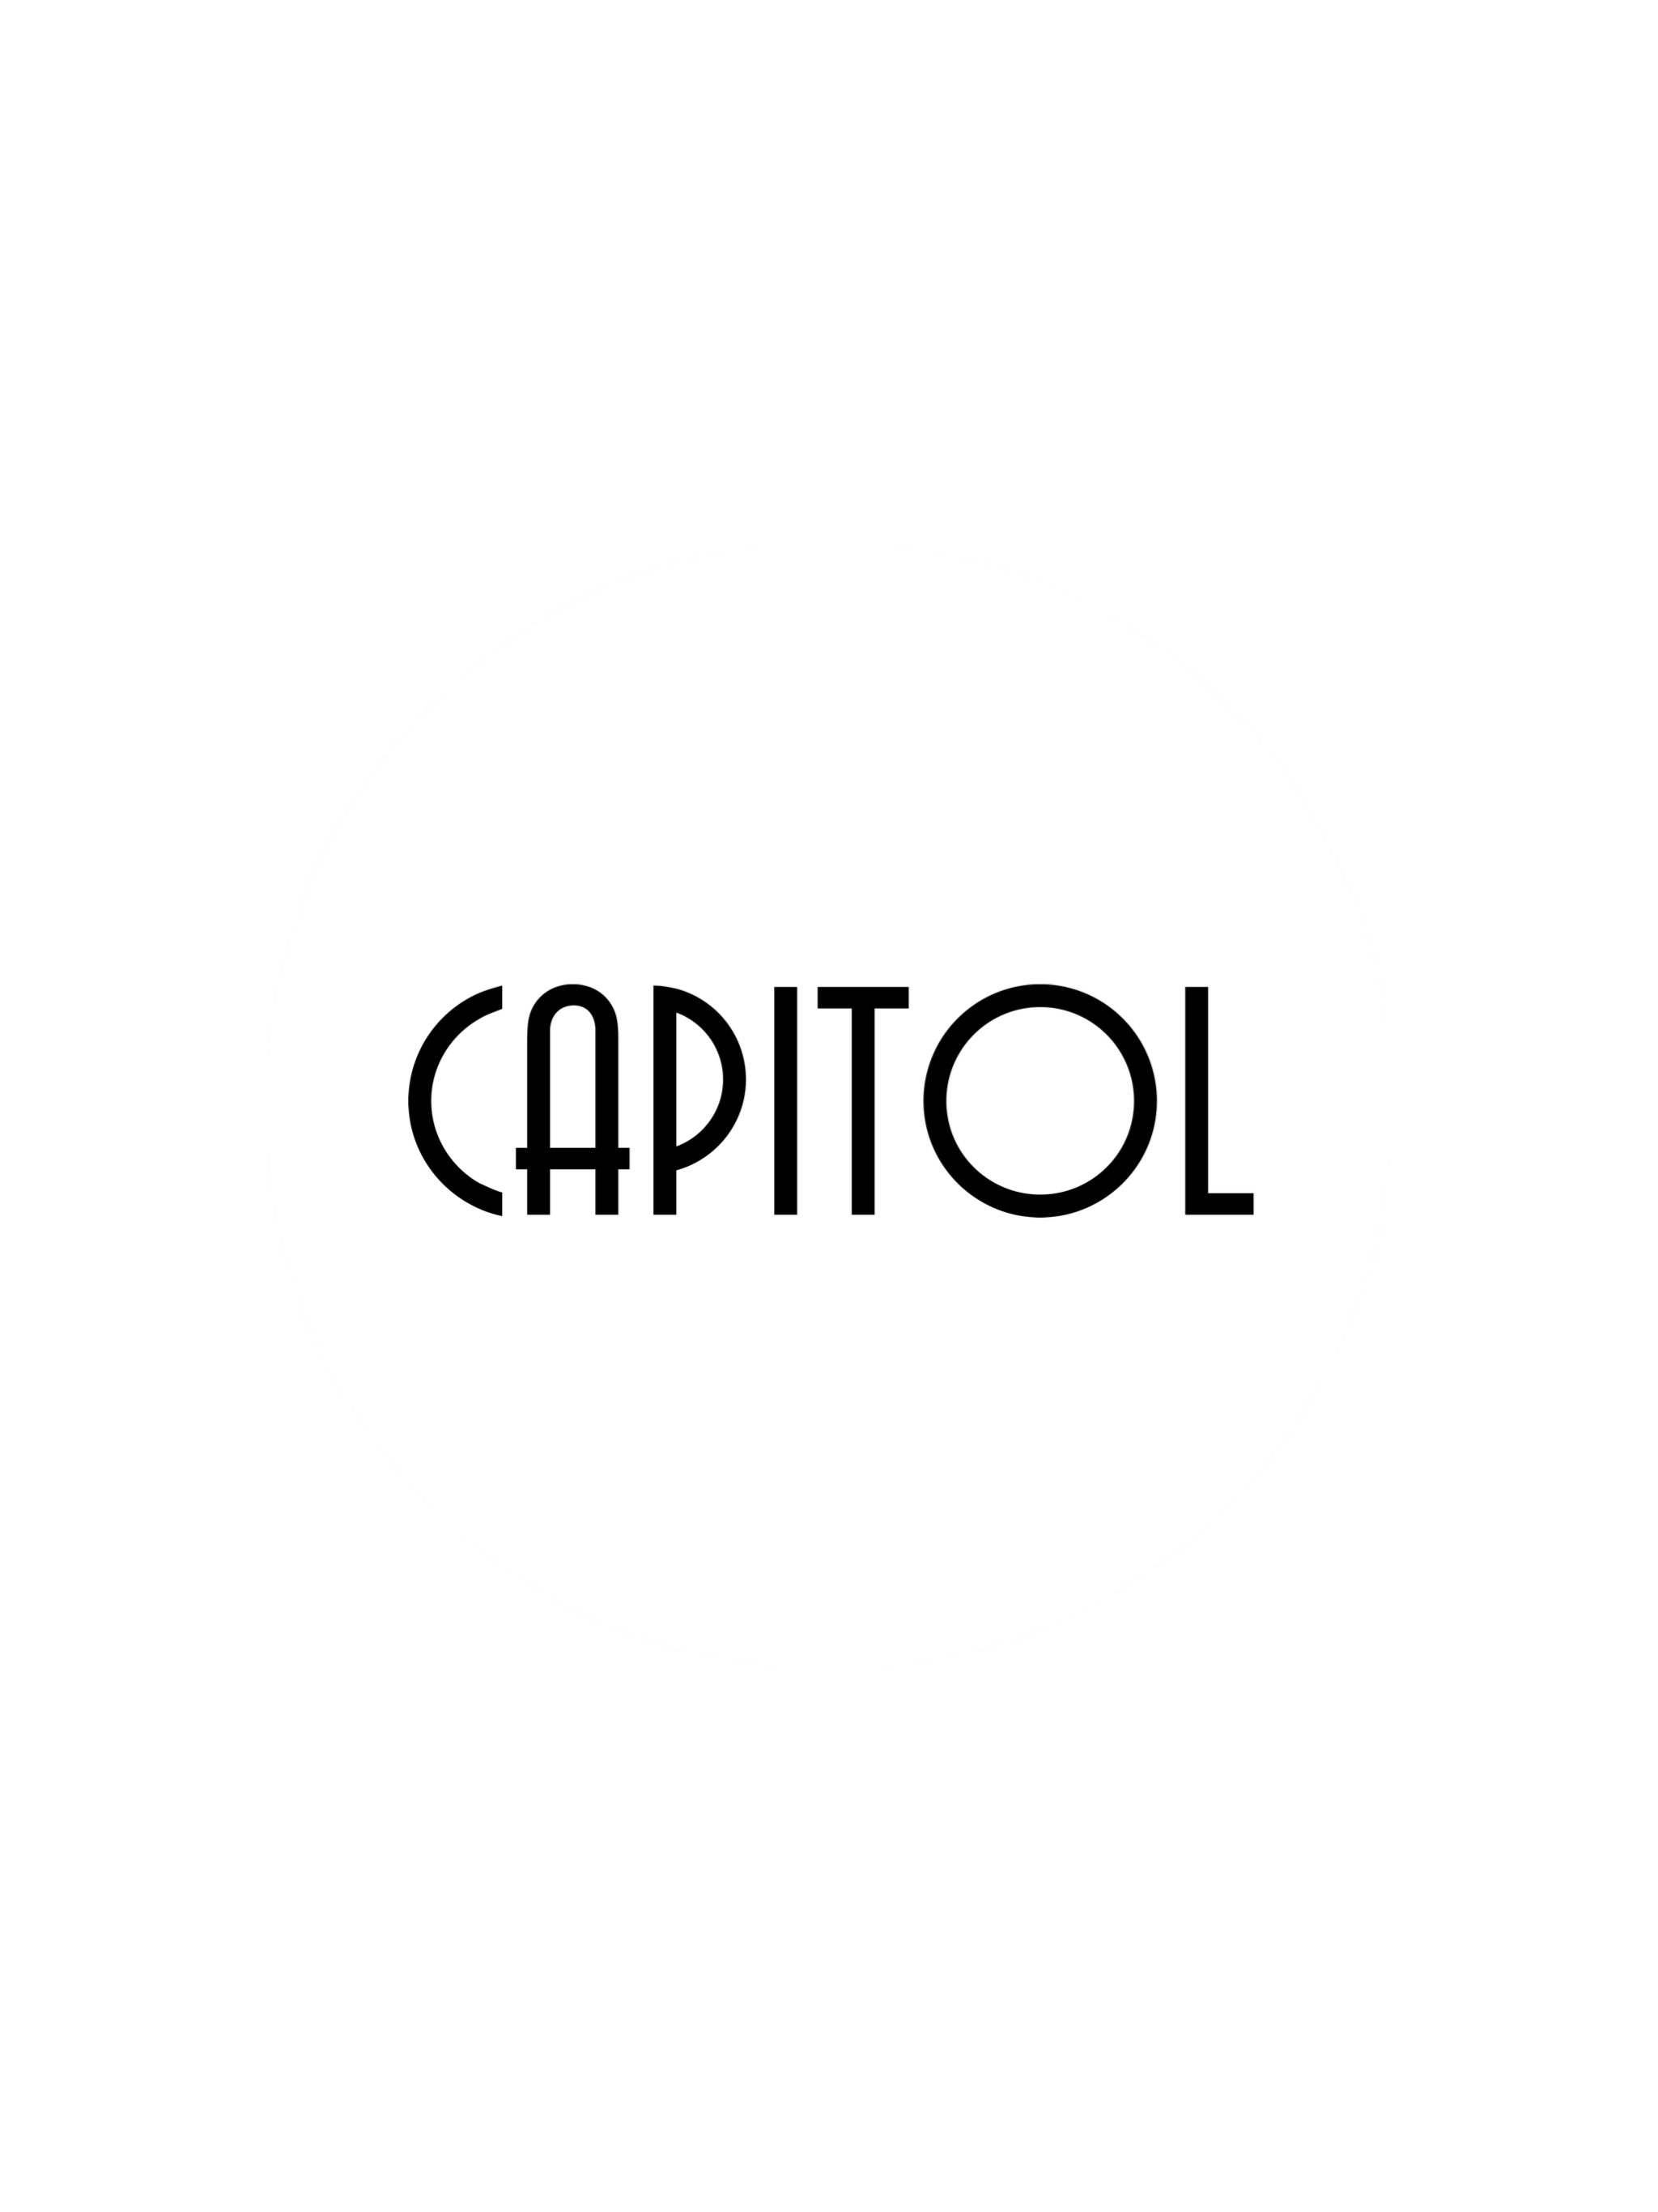 Capitol-logo